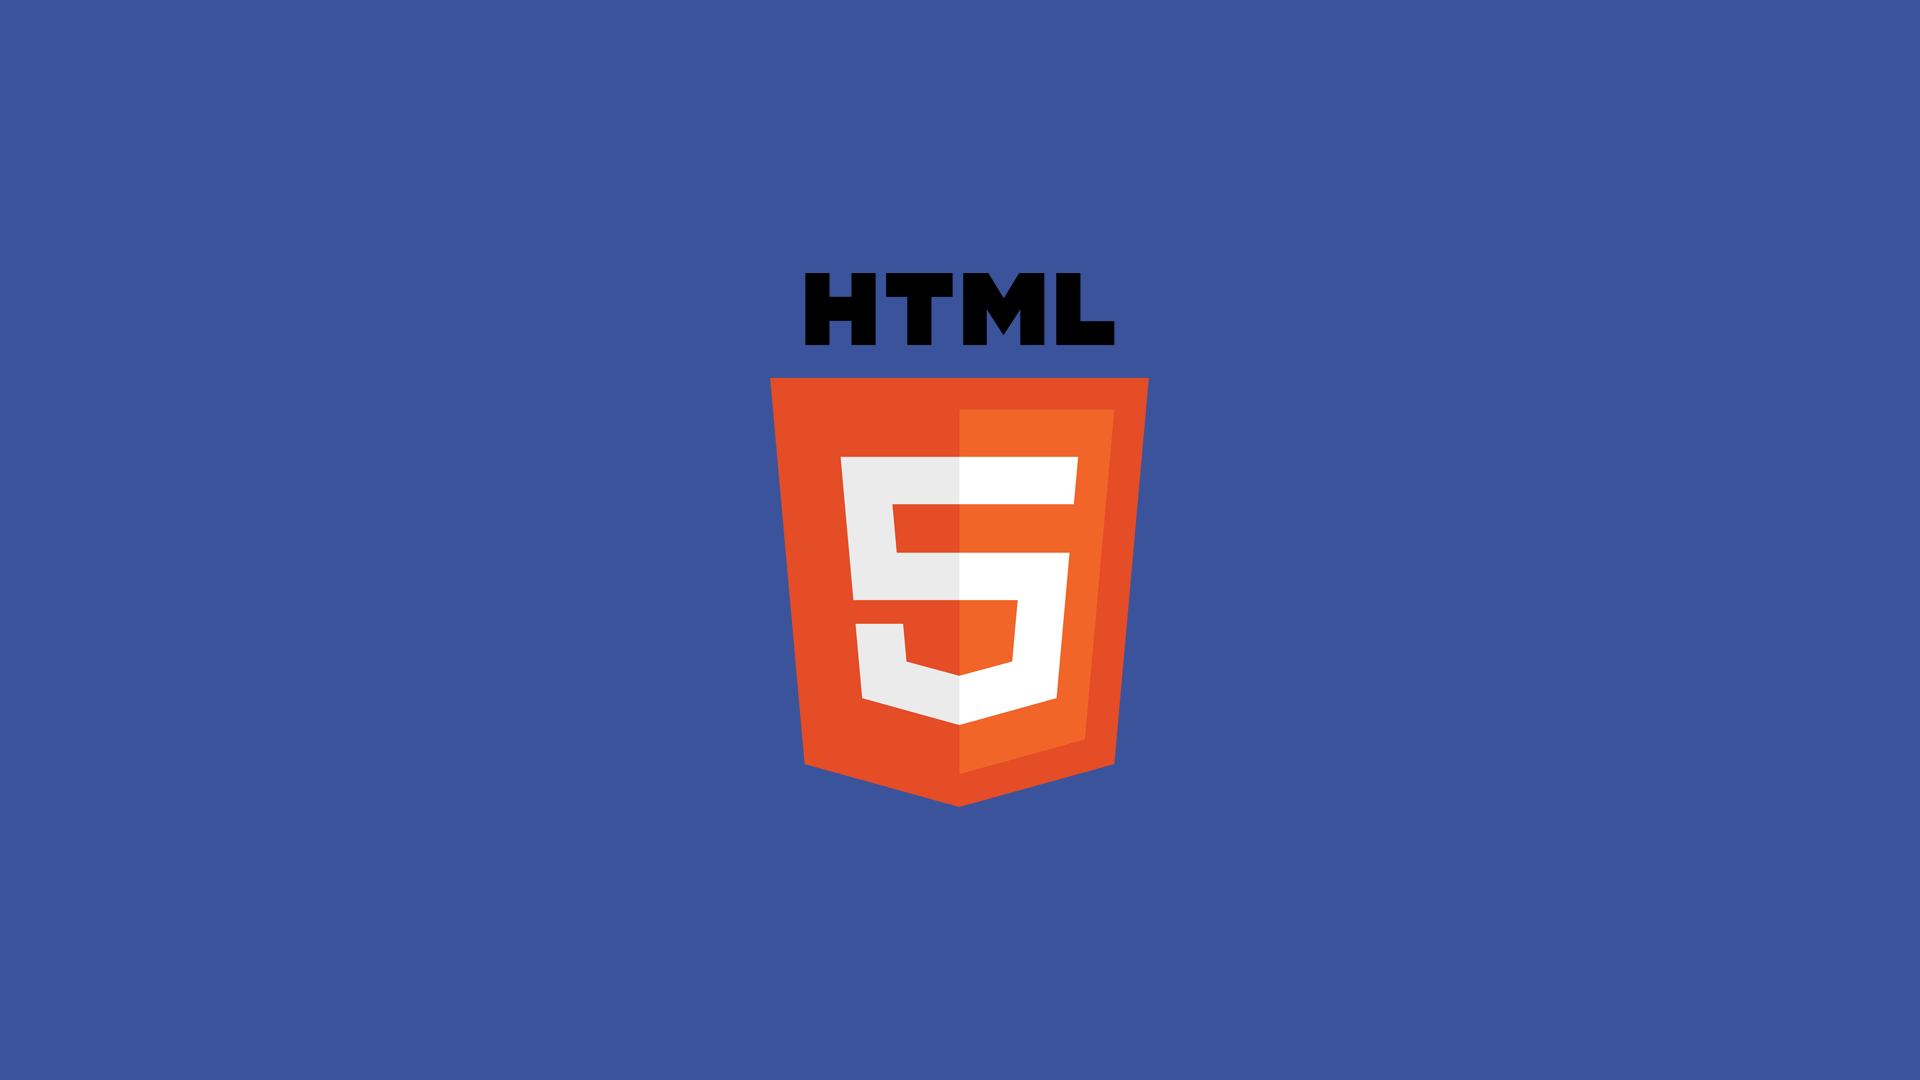 Html5 stream. Изображение в html. Html5 лого. Значок html5. Логотип html CSS.